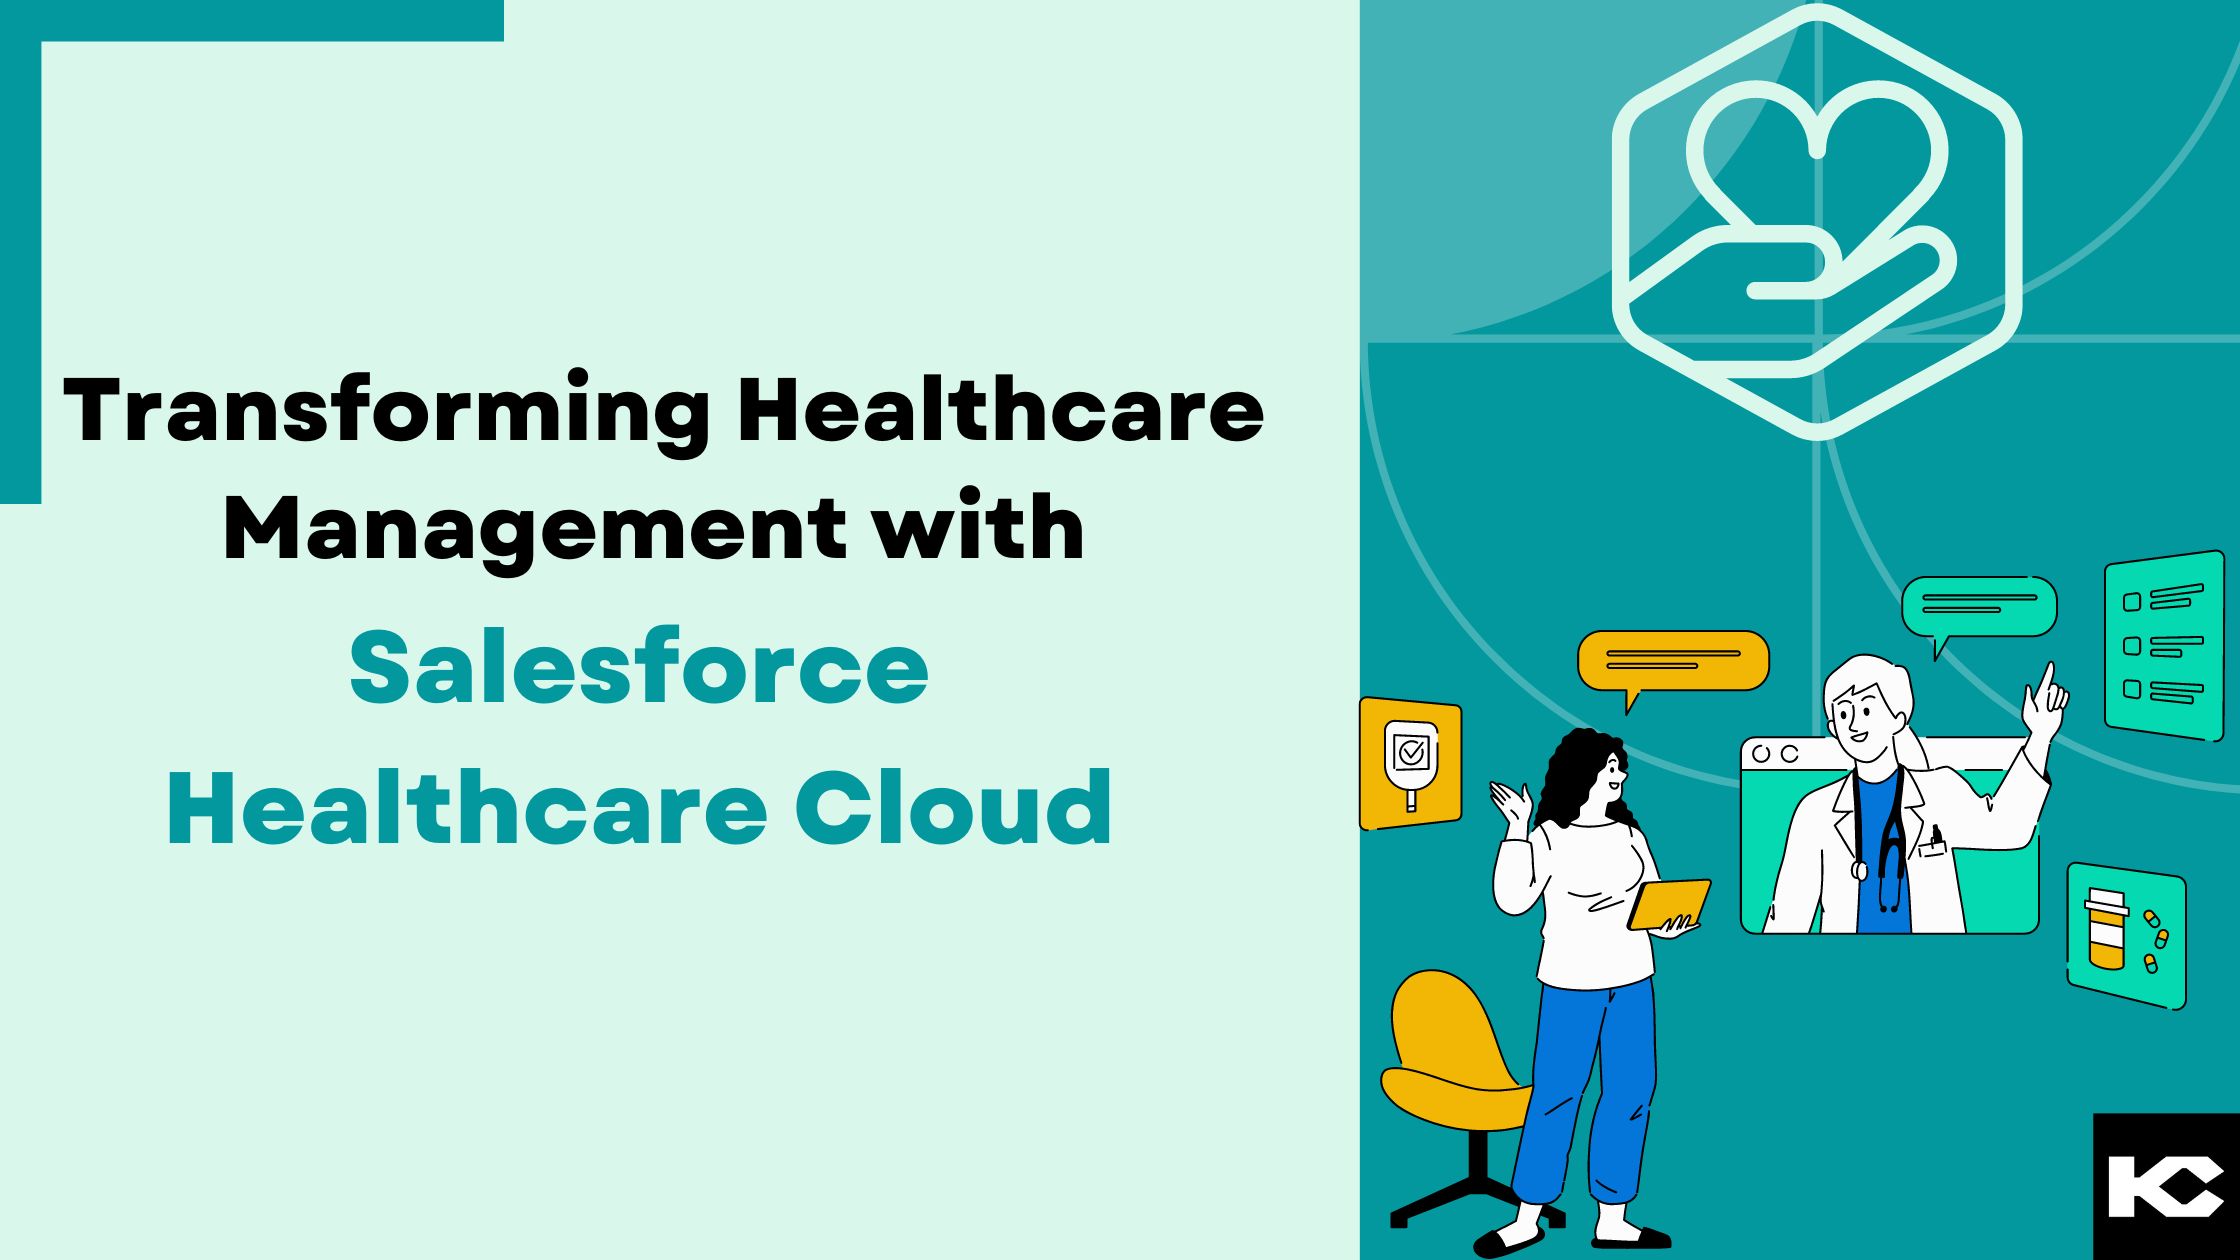 Salesforce Healthcare Cloud (Kizzy Consulting - Top Salesforce Partner)